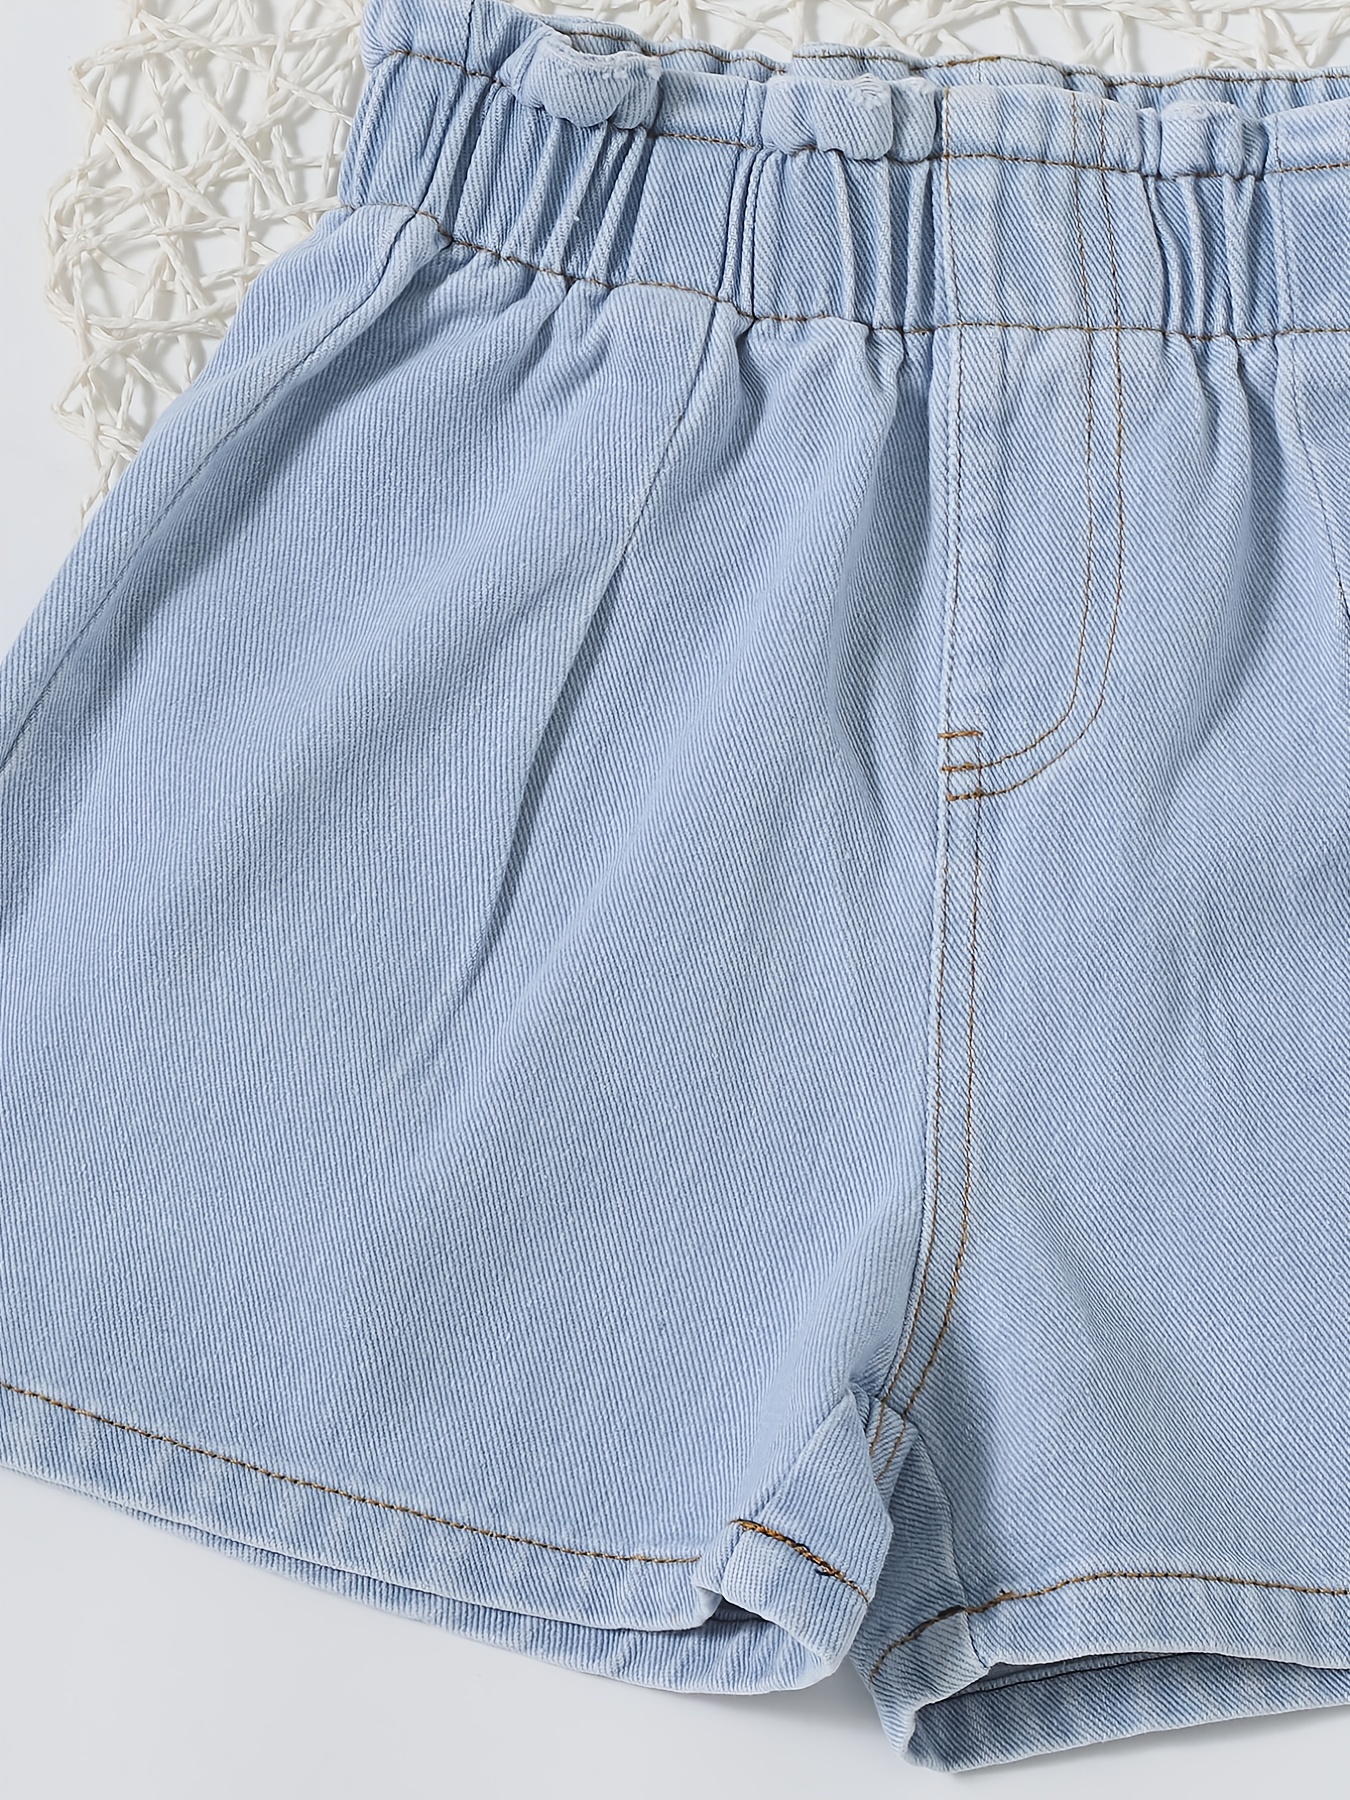 The Cutest Paper Bag Denim Shorts For Summer - Fashion Fairytale